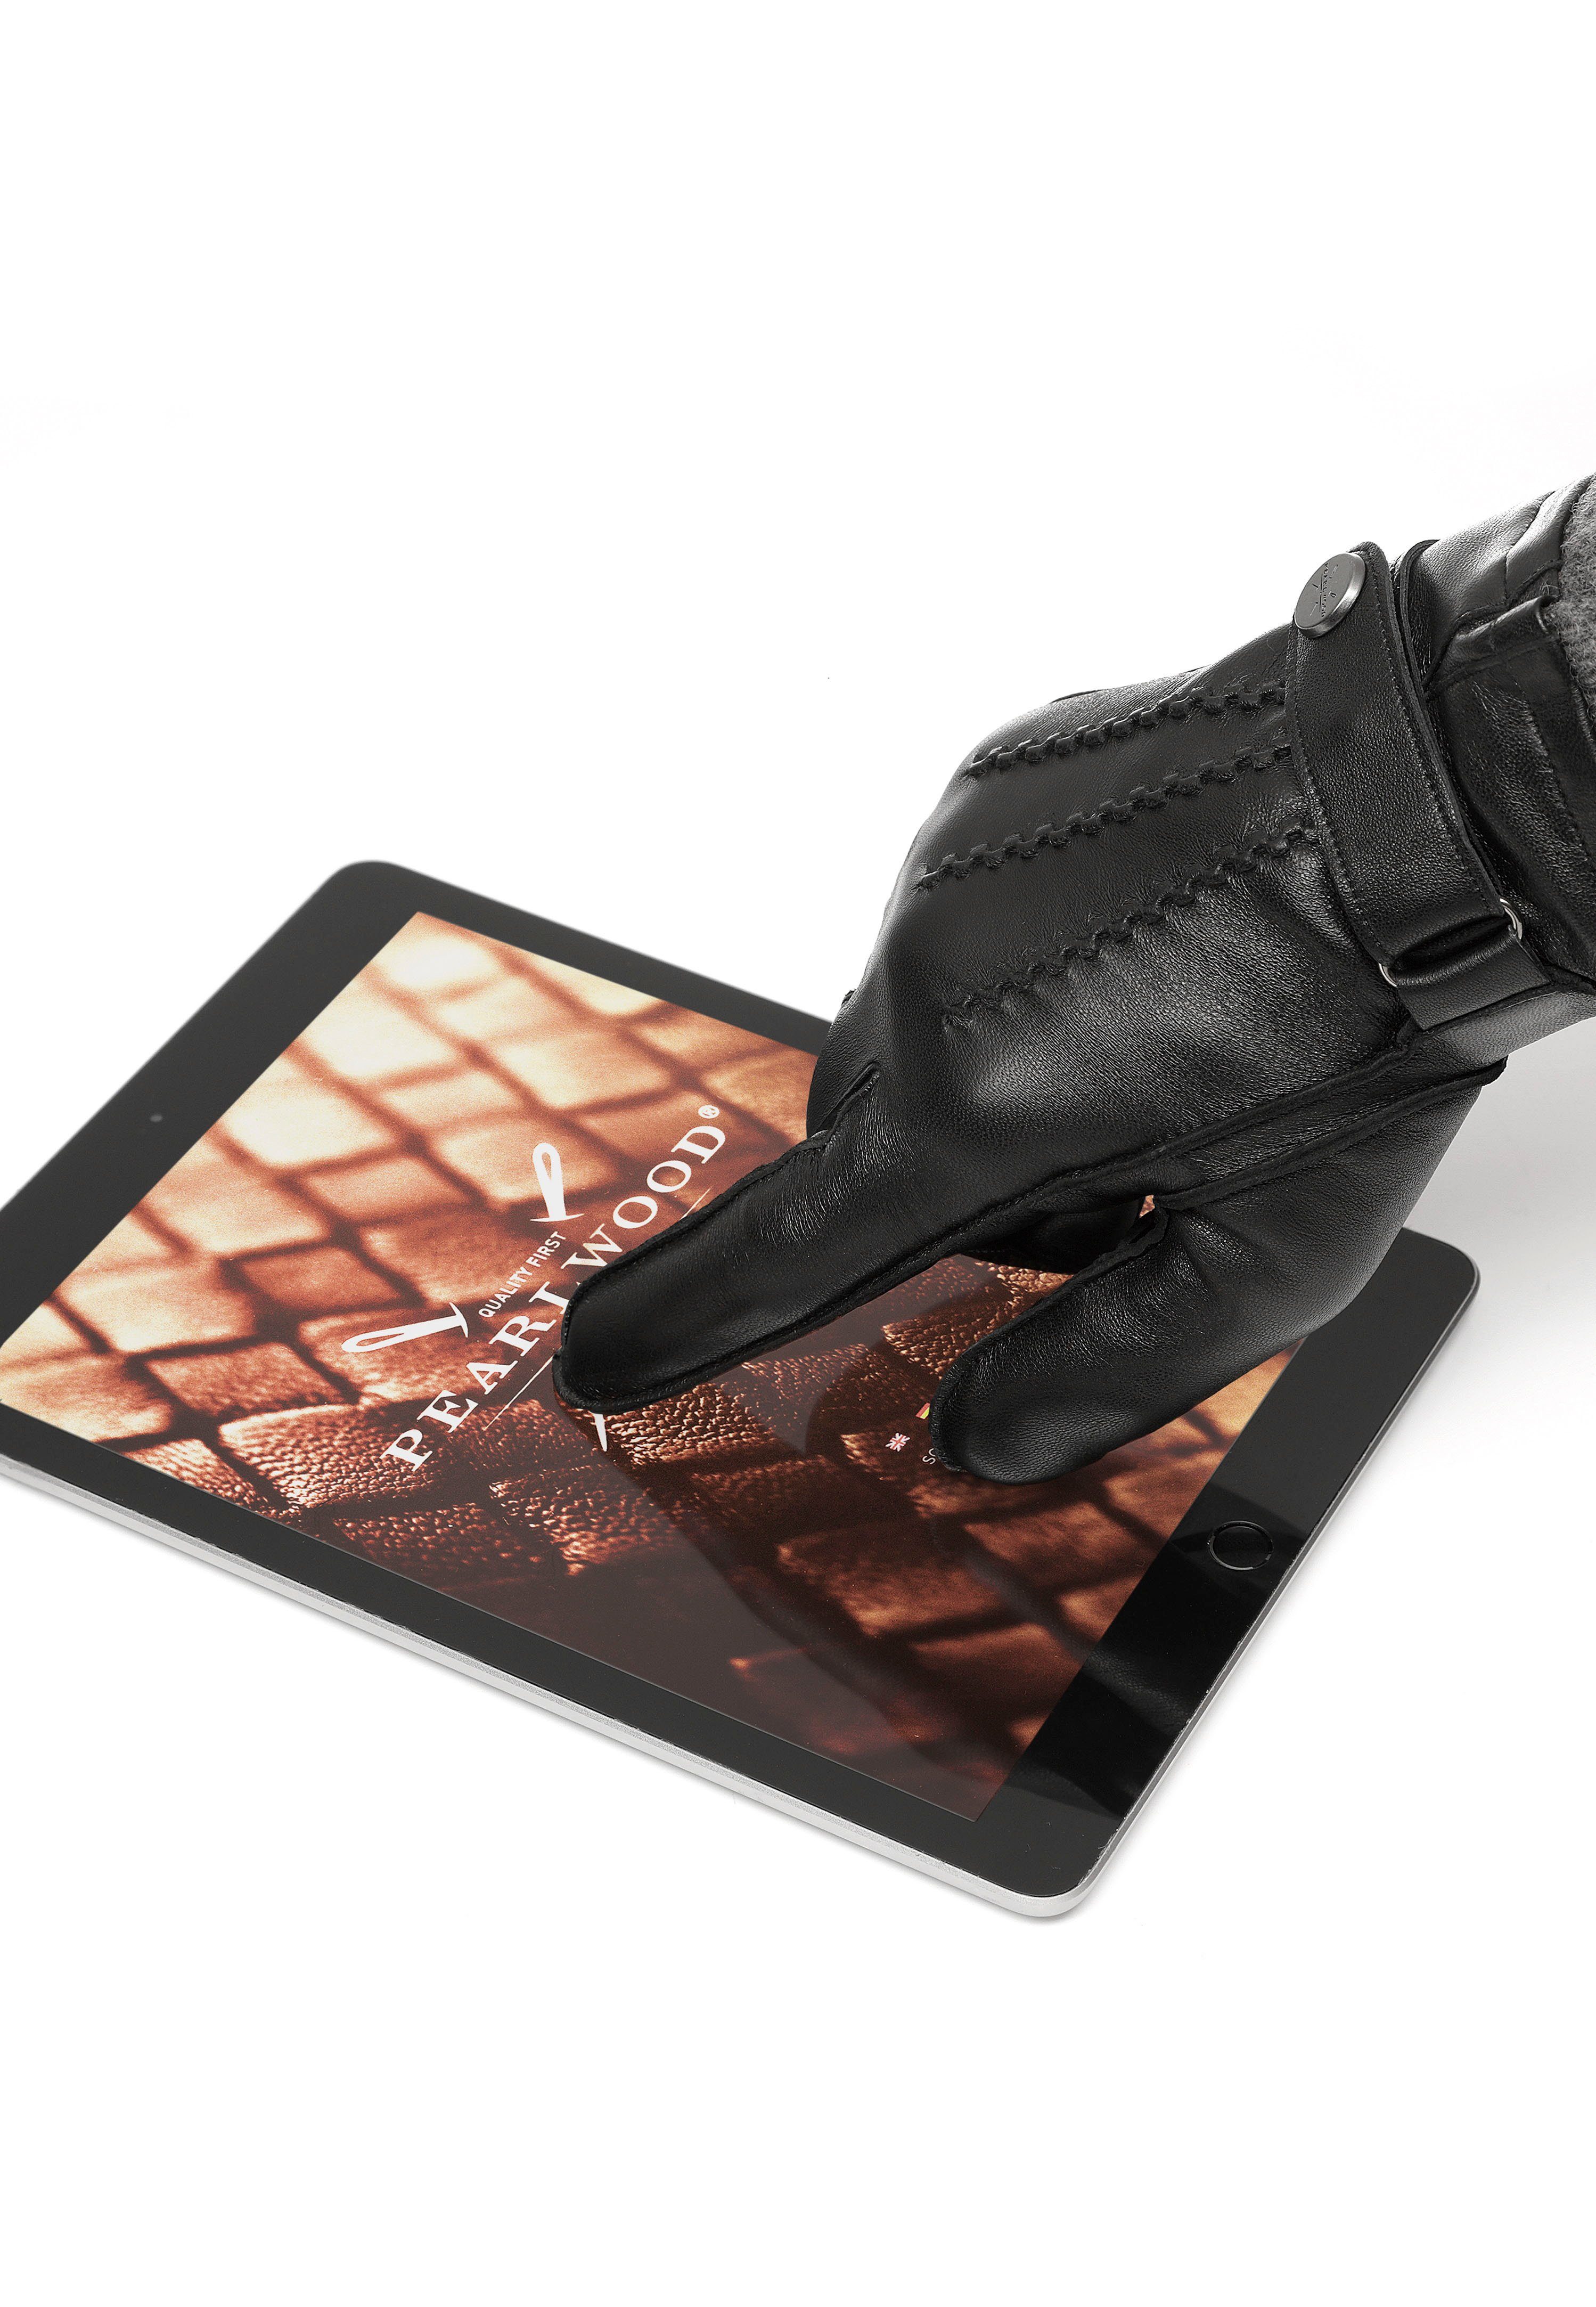 10 PEARLWOOD Lederhandschuhe - proofed Touchscreen Finger System Mike